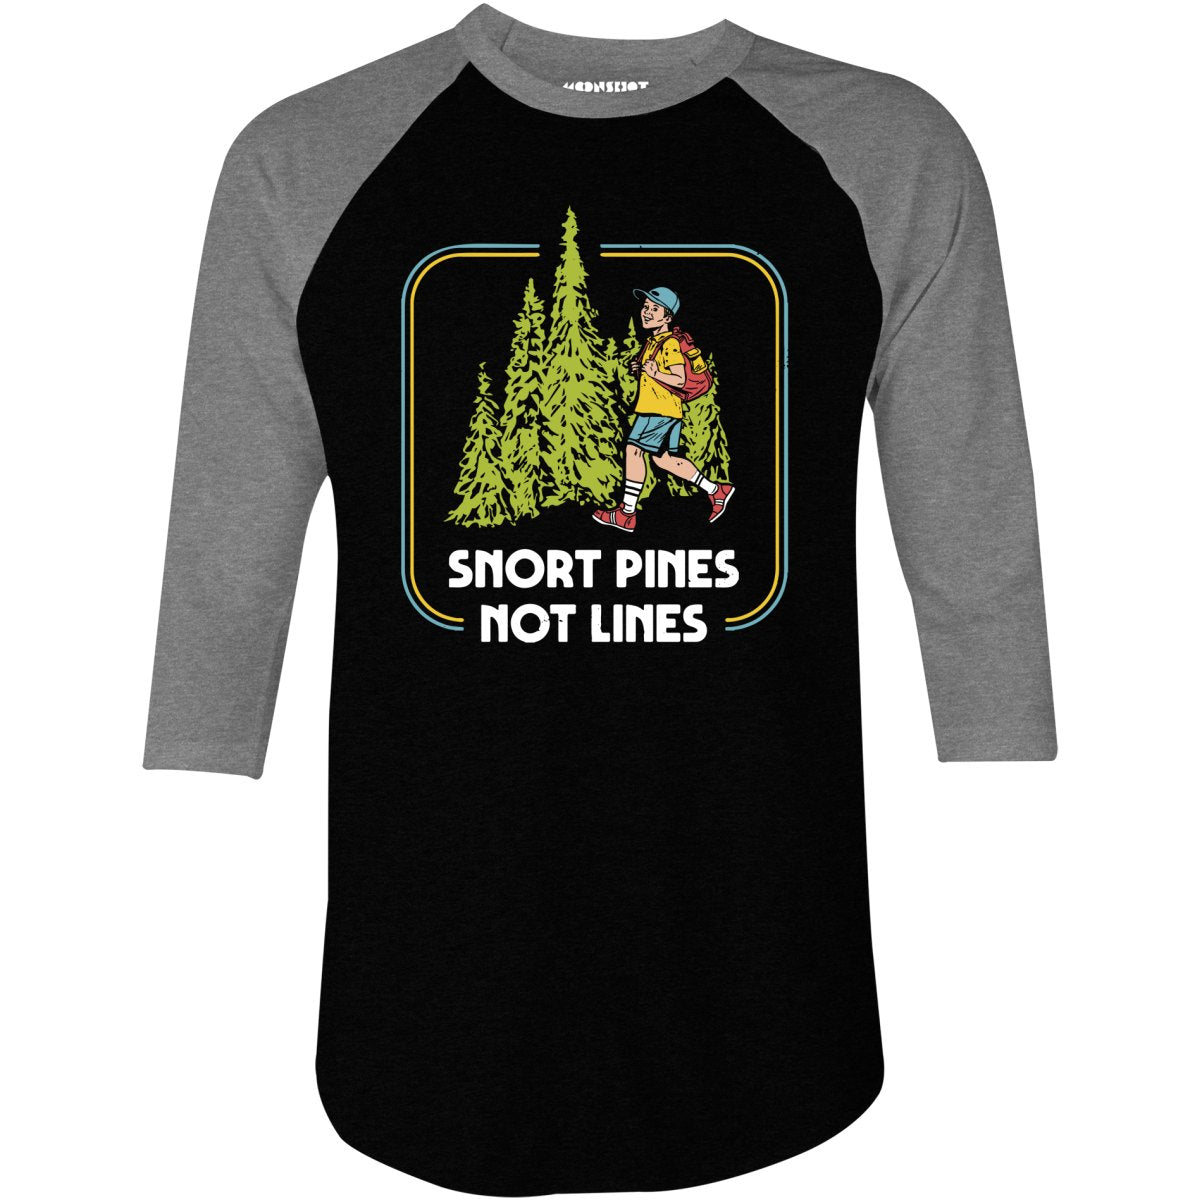 Snort Pines Not Lines - 3/4 Sleeve Raglan T-Shirt